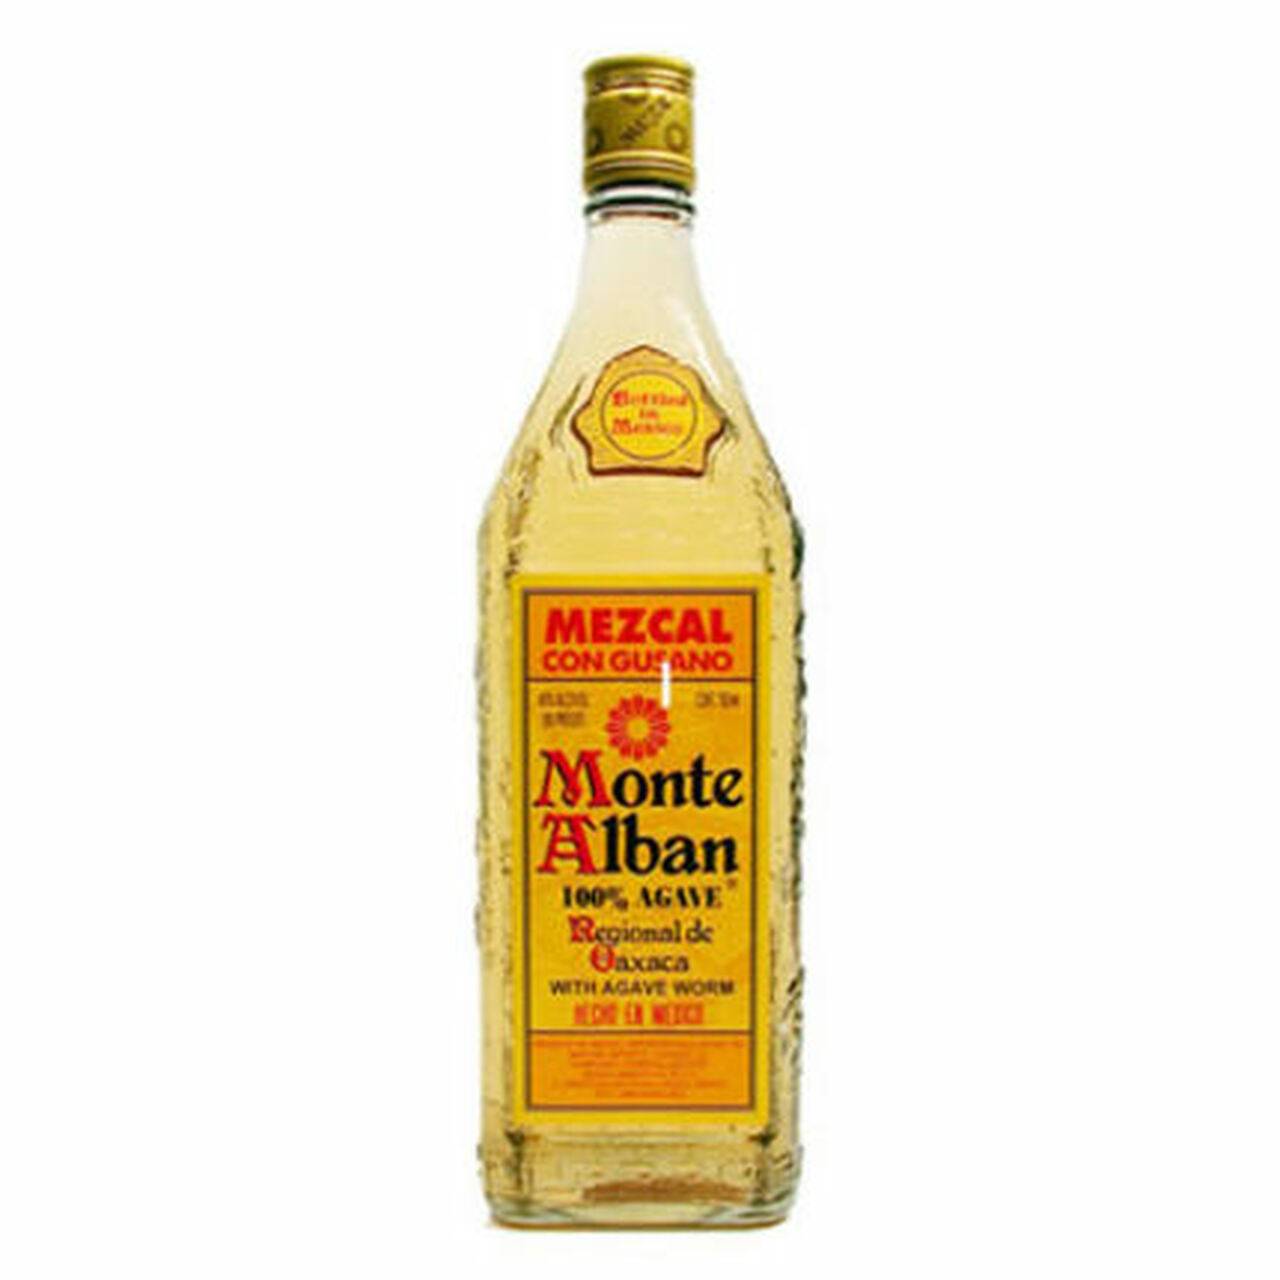 monte-alban-mezcal-tequila.jpg